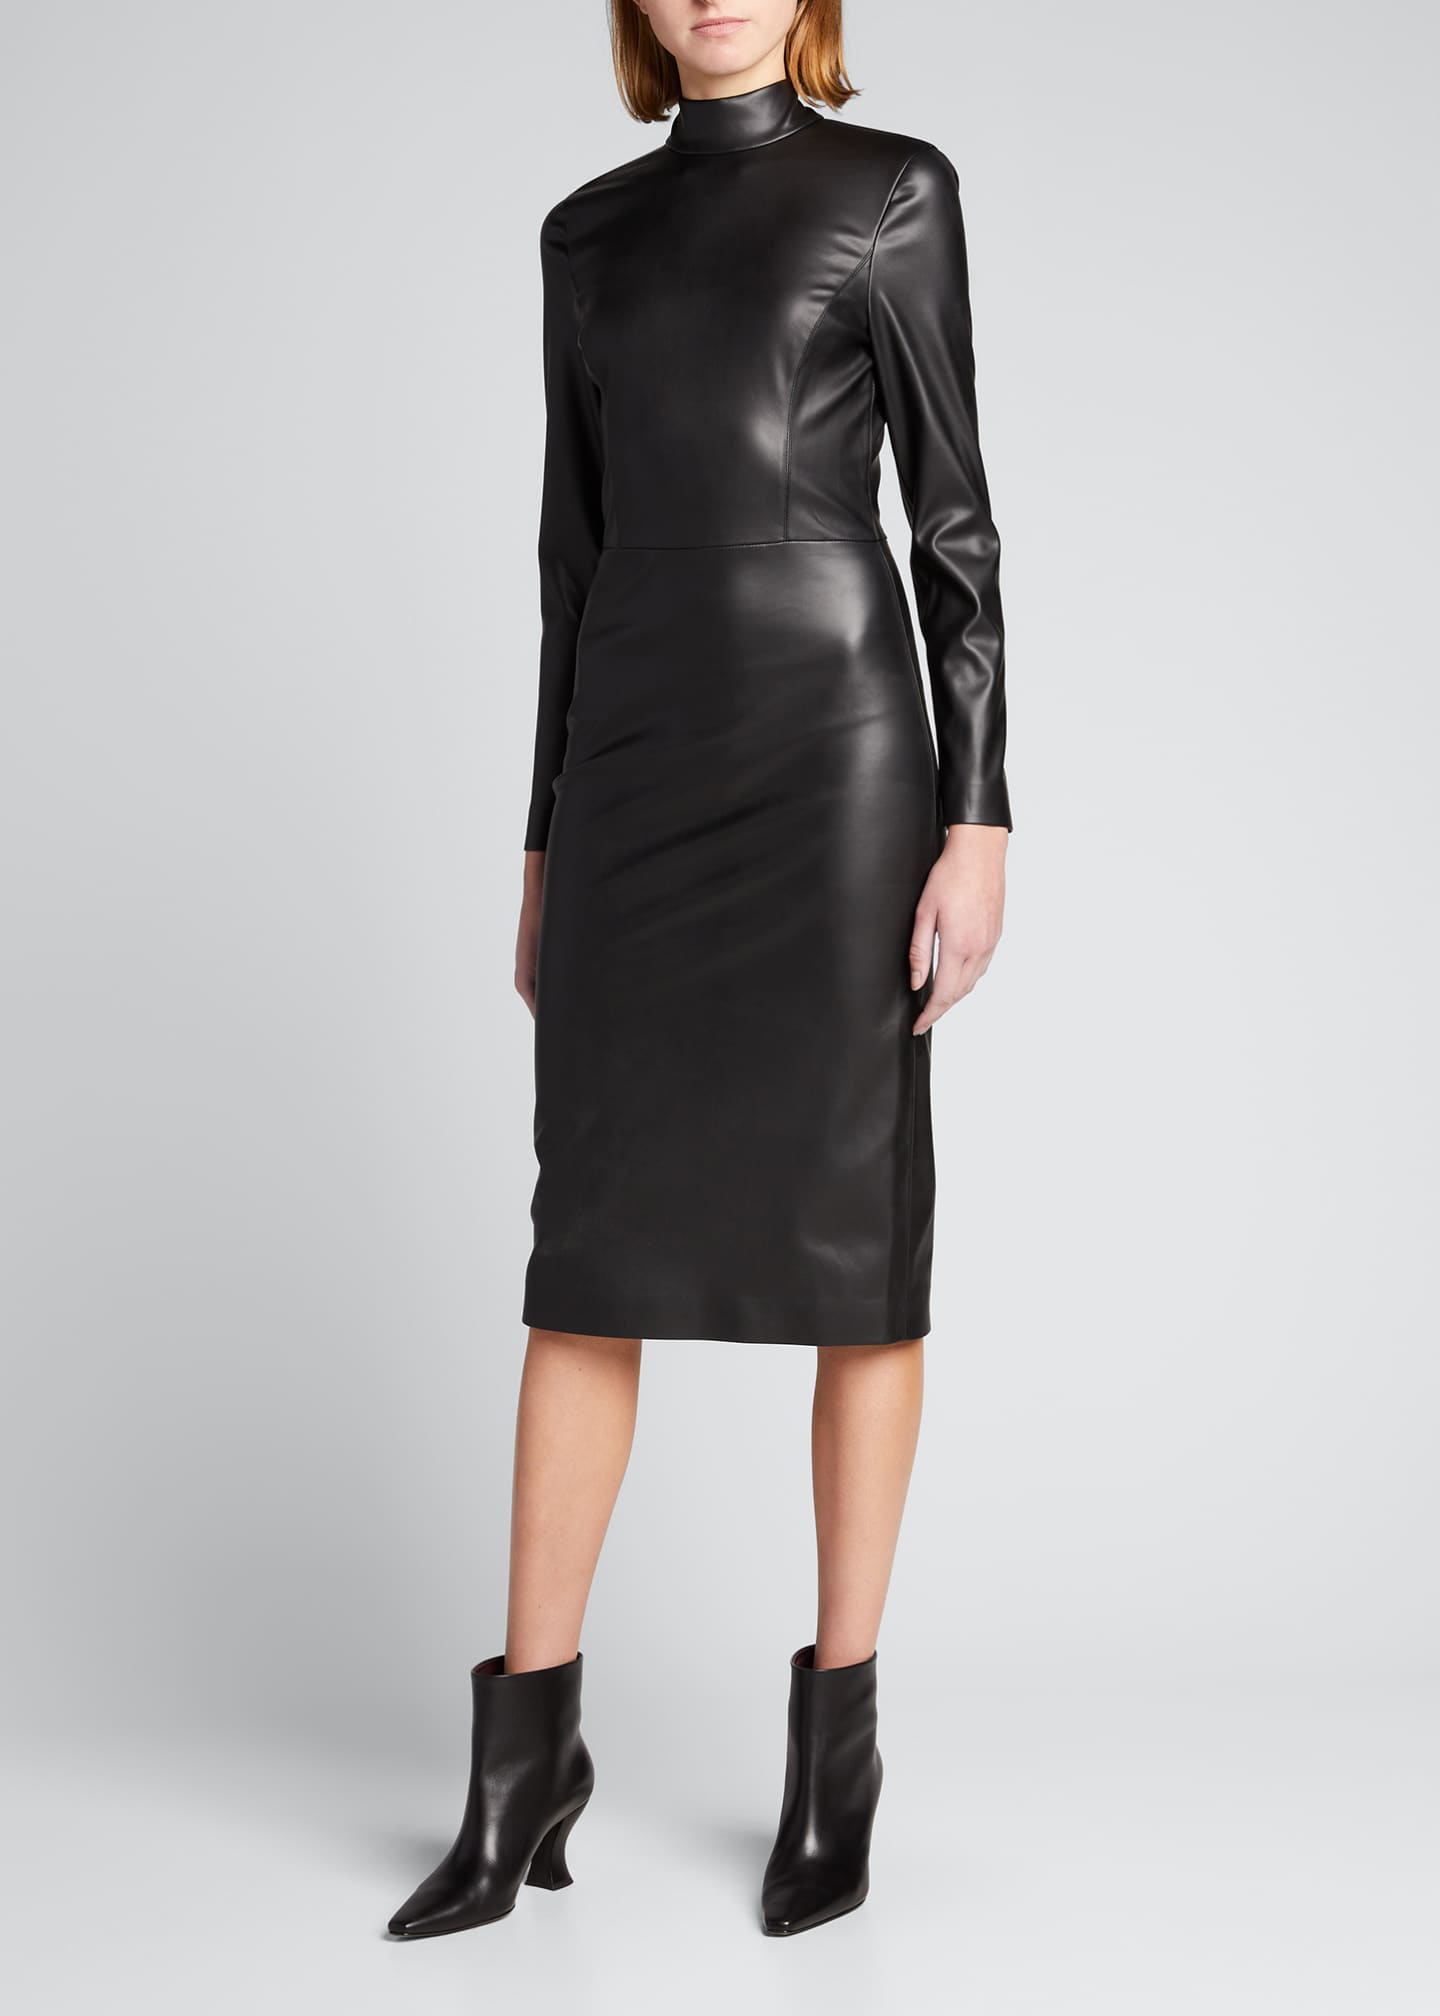 Alice + Olivia Delora Faux-Leather Mock-Neck Open-Back Dress - Bergdorf ...